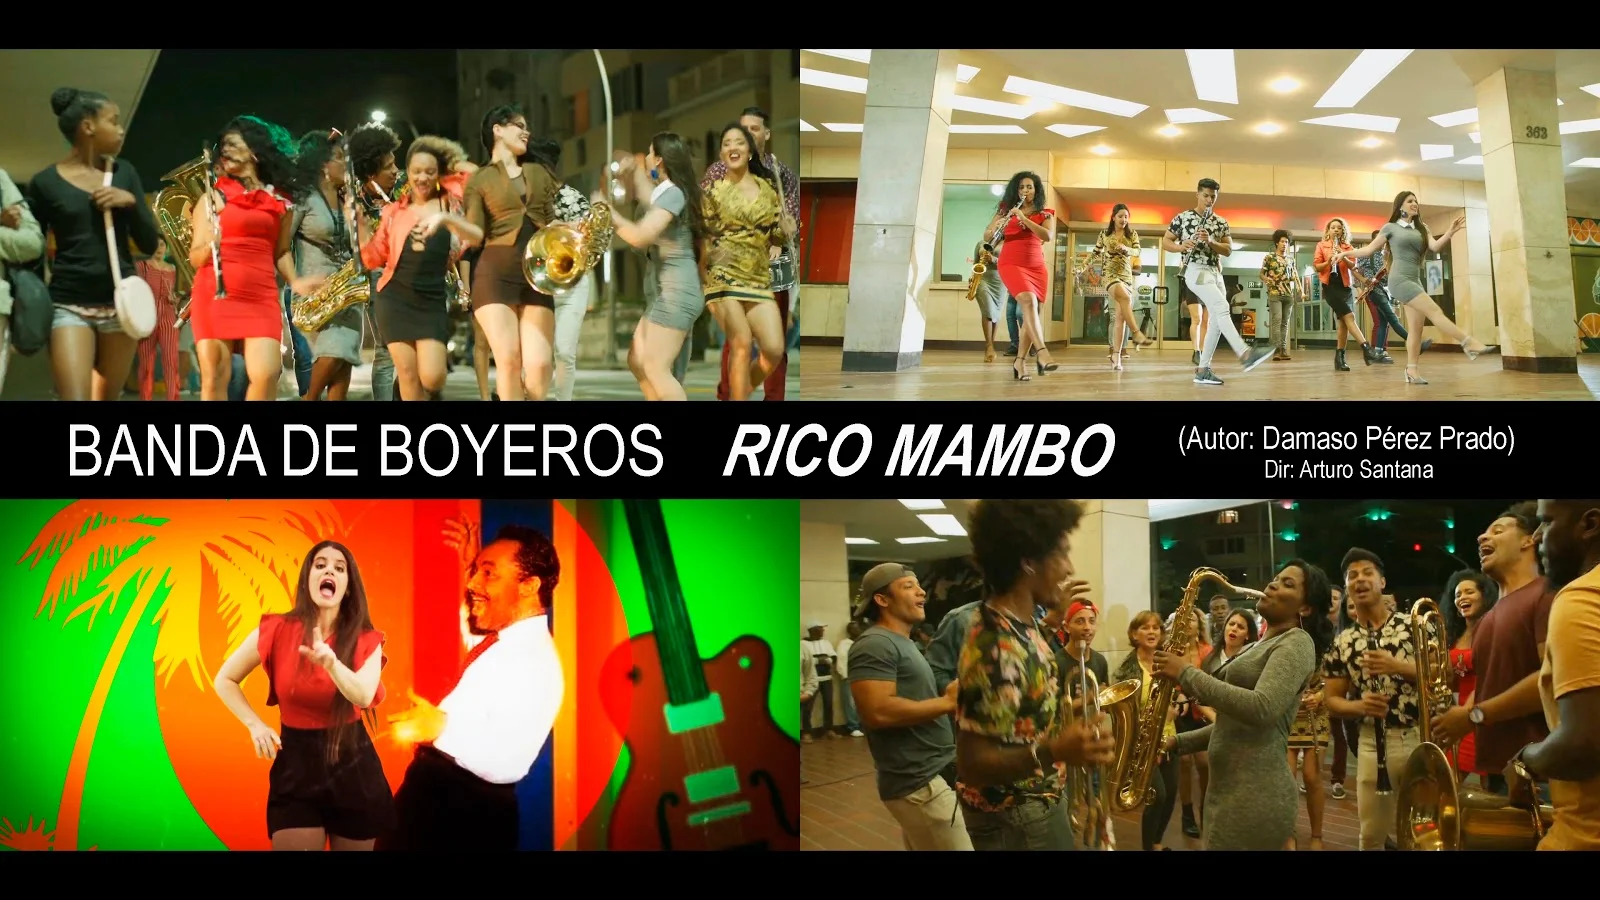 Banda de Boyeros - ¨Rico Mambo¨ (Damaso Pérez Prado) - Videoclip - Dir: Arturo Santana. Portal Del Vídeo Clip Cubano. Música cubana. Mambo. CUBA.